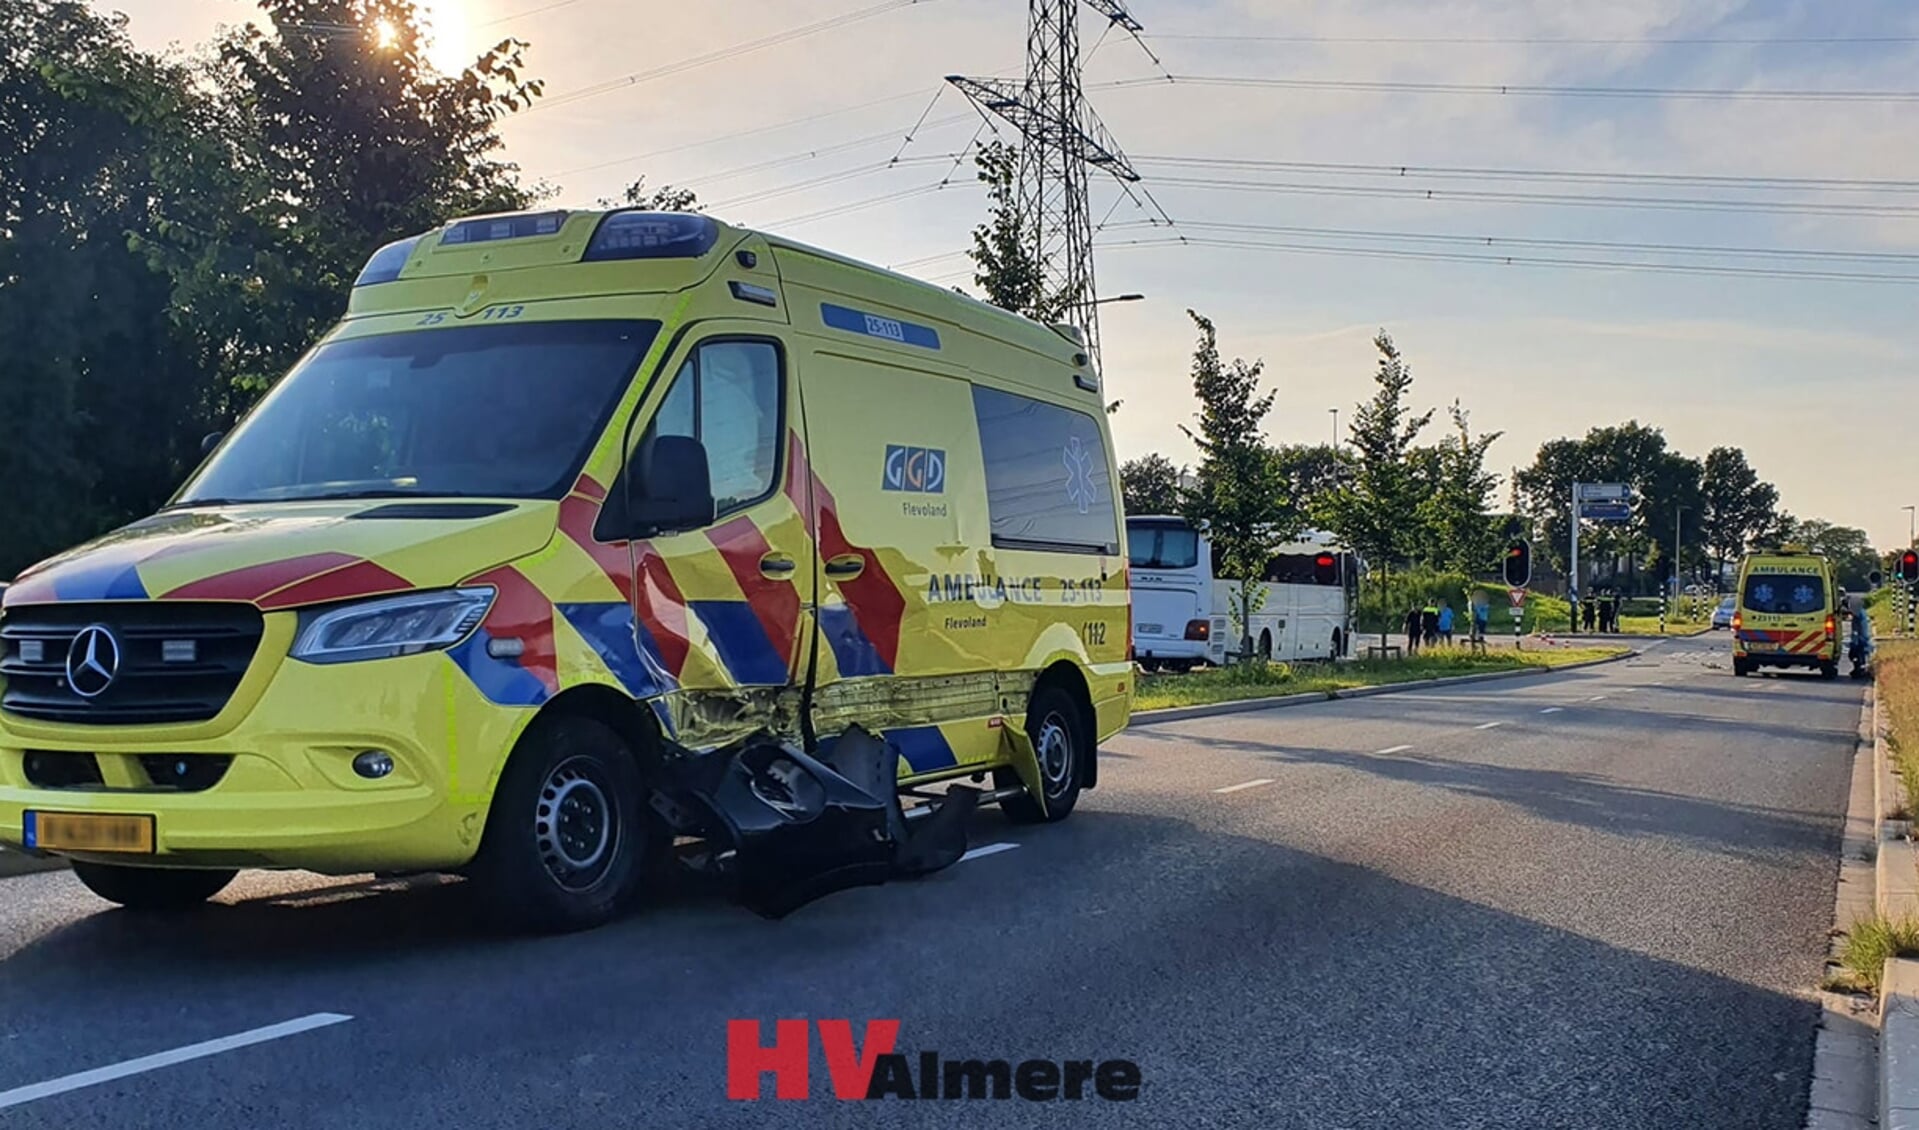 De ambulance raakte flink beschadigd. (Foto: HV Almere)